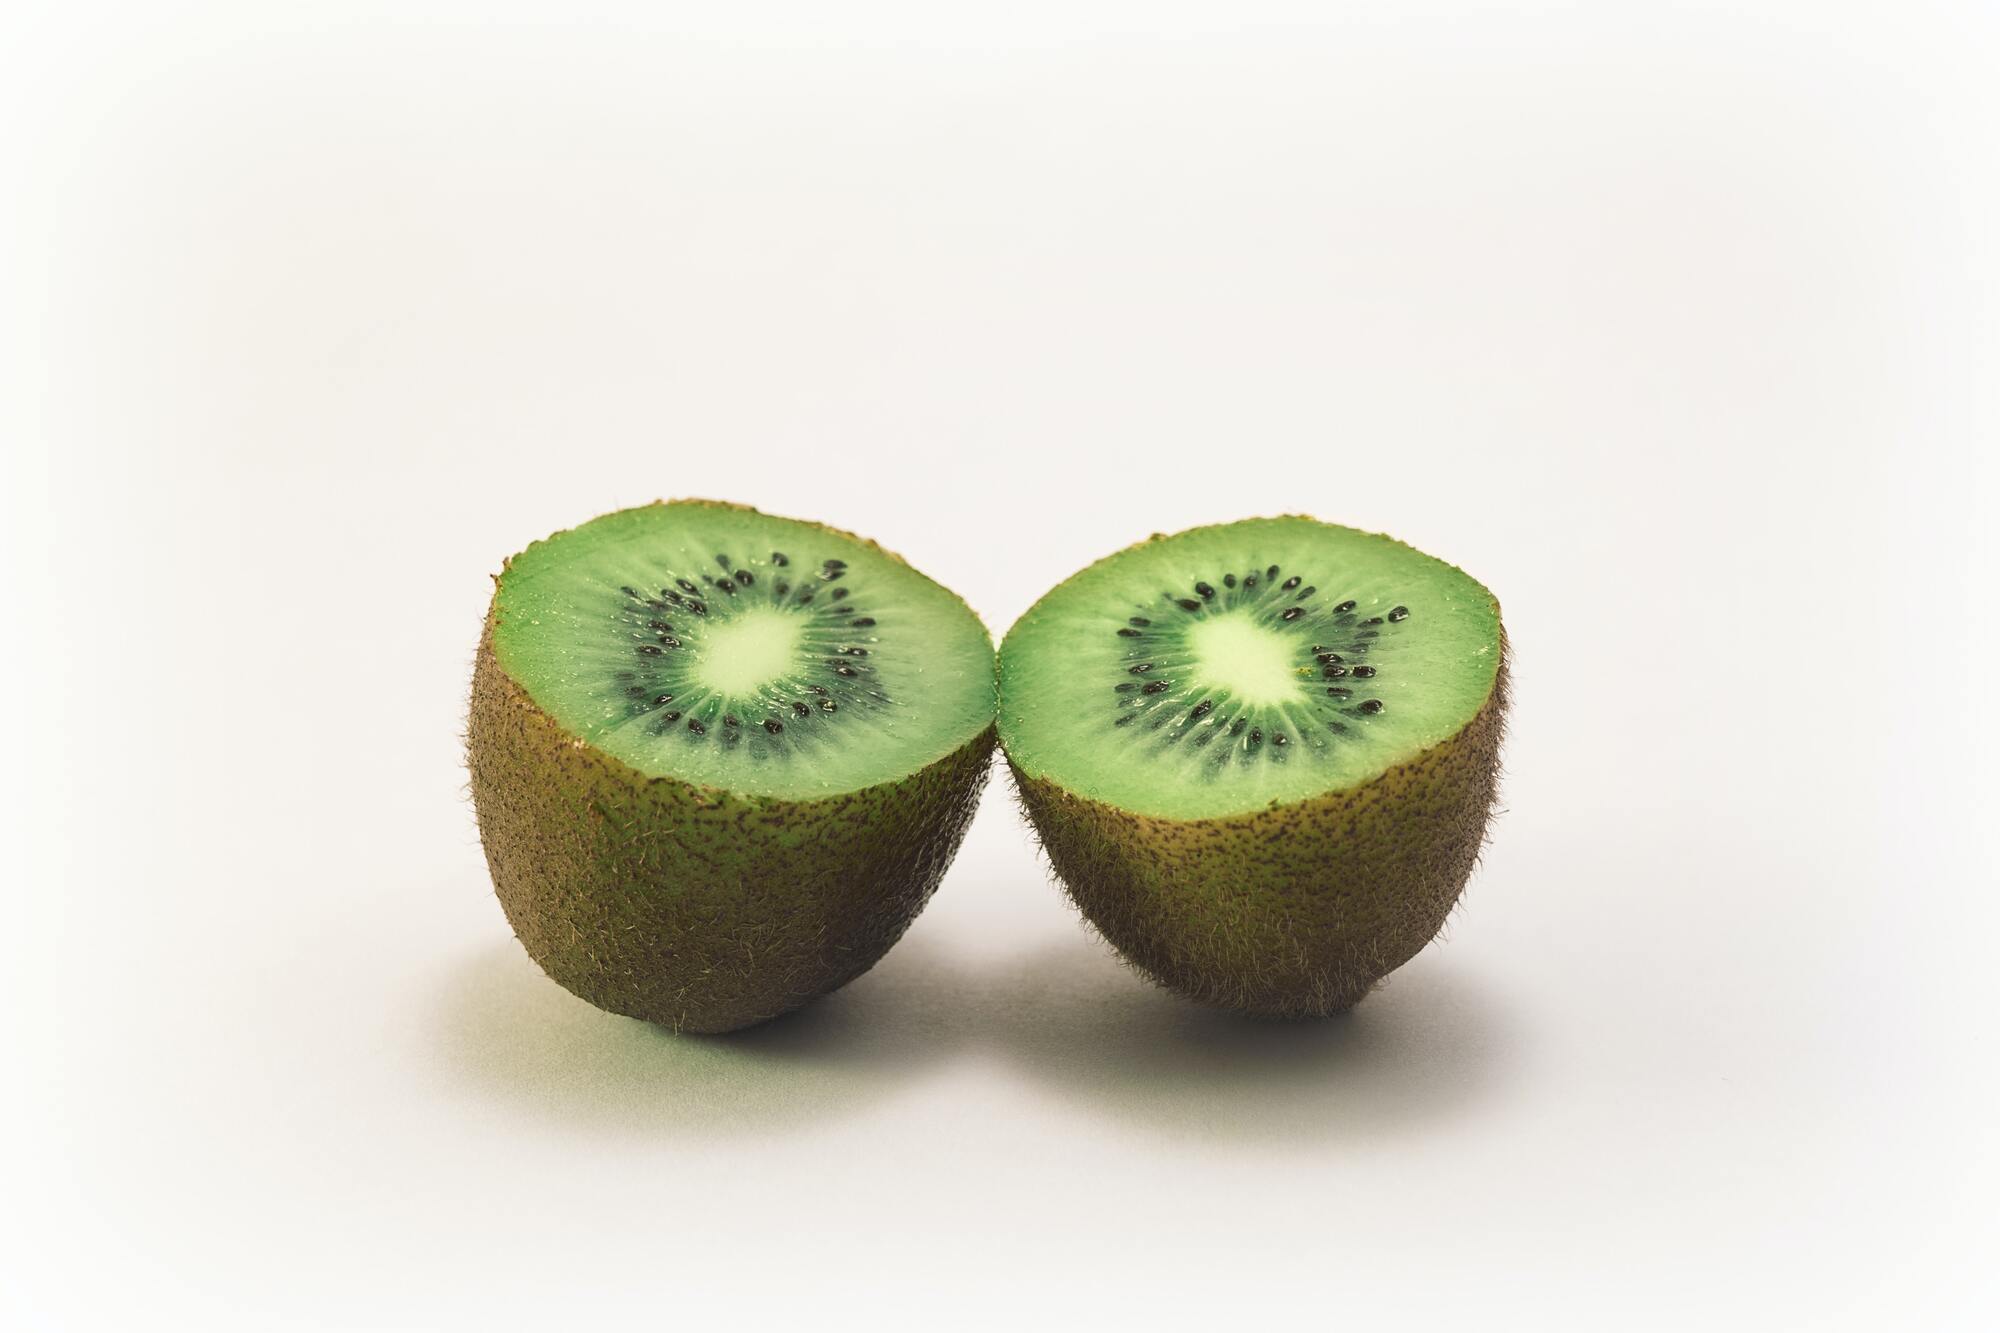 The kiwi peel can also be eaten